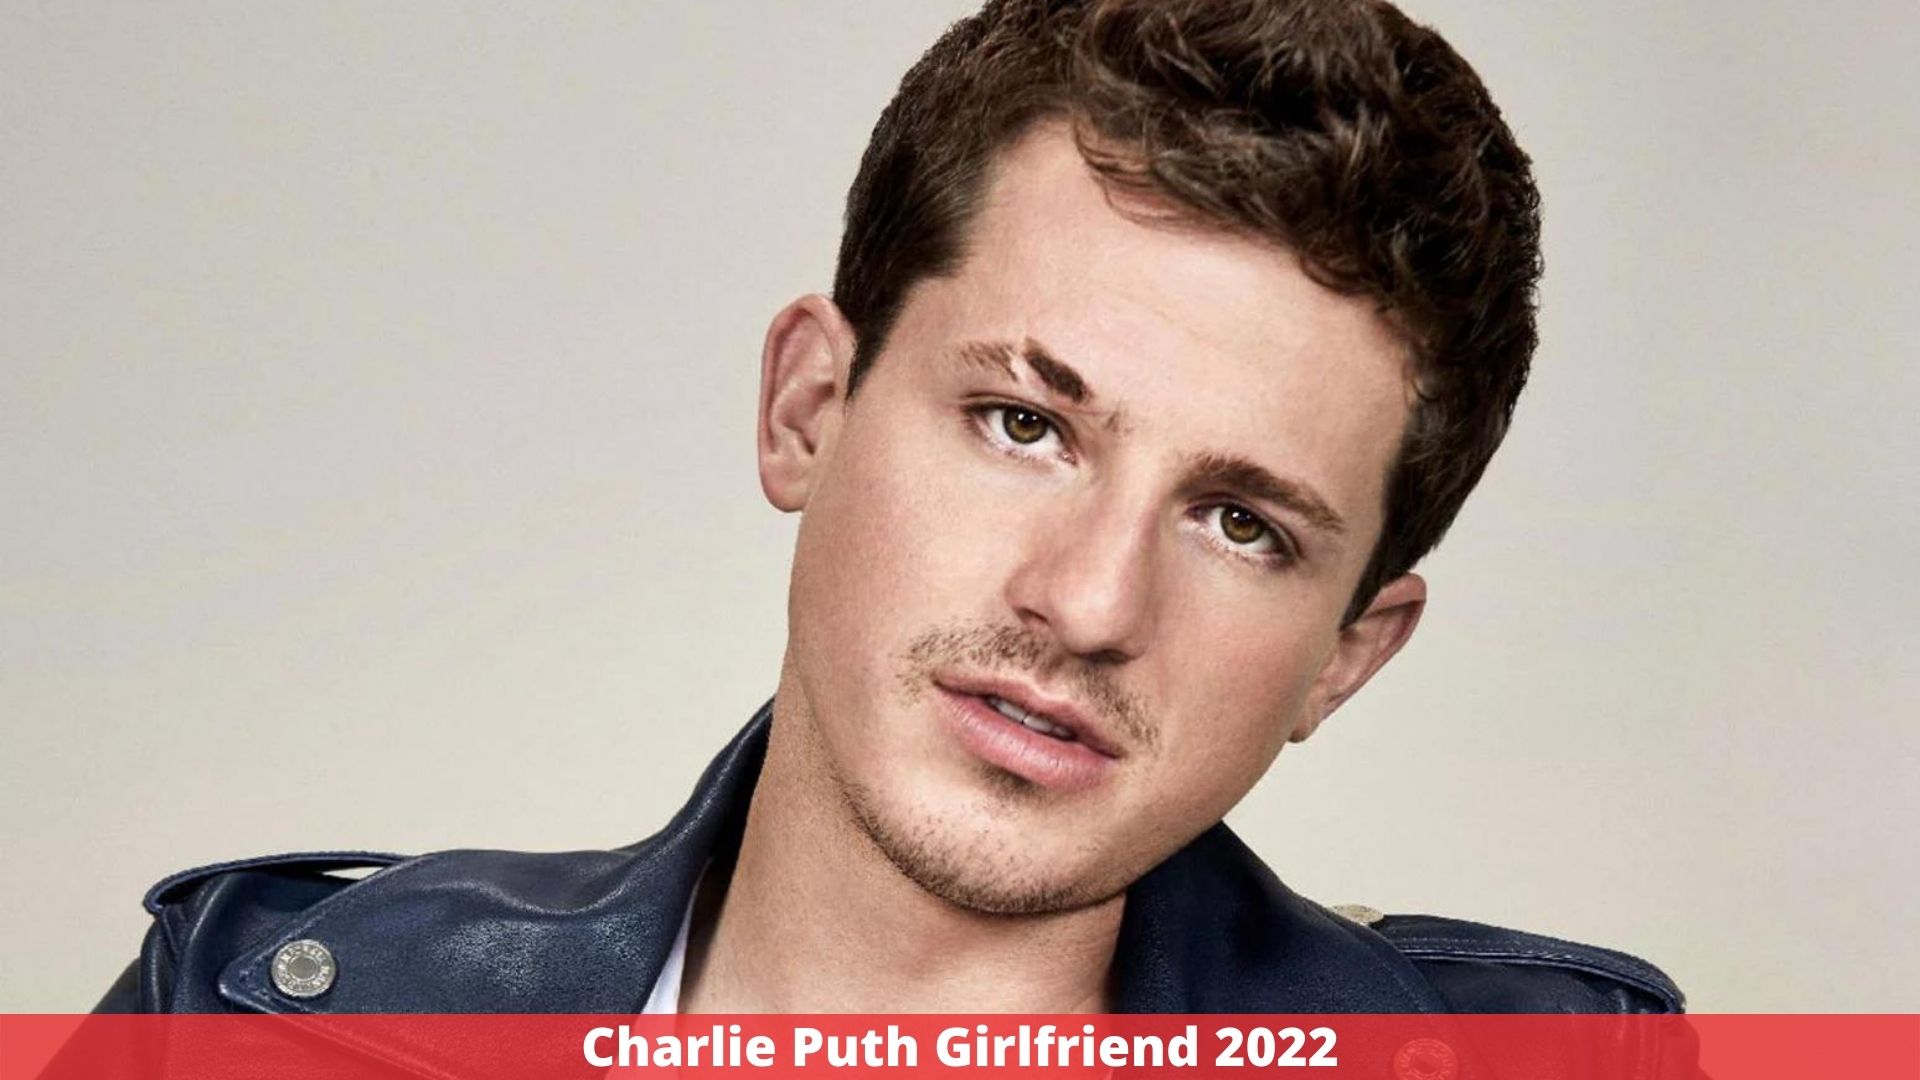 Charlie Puth Girlfriend 2022